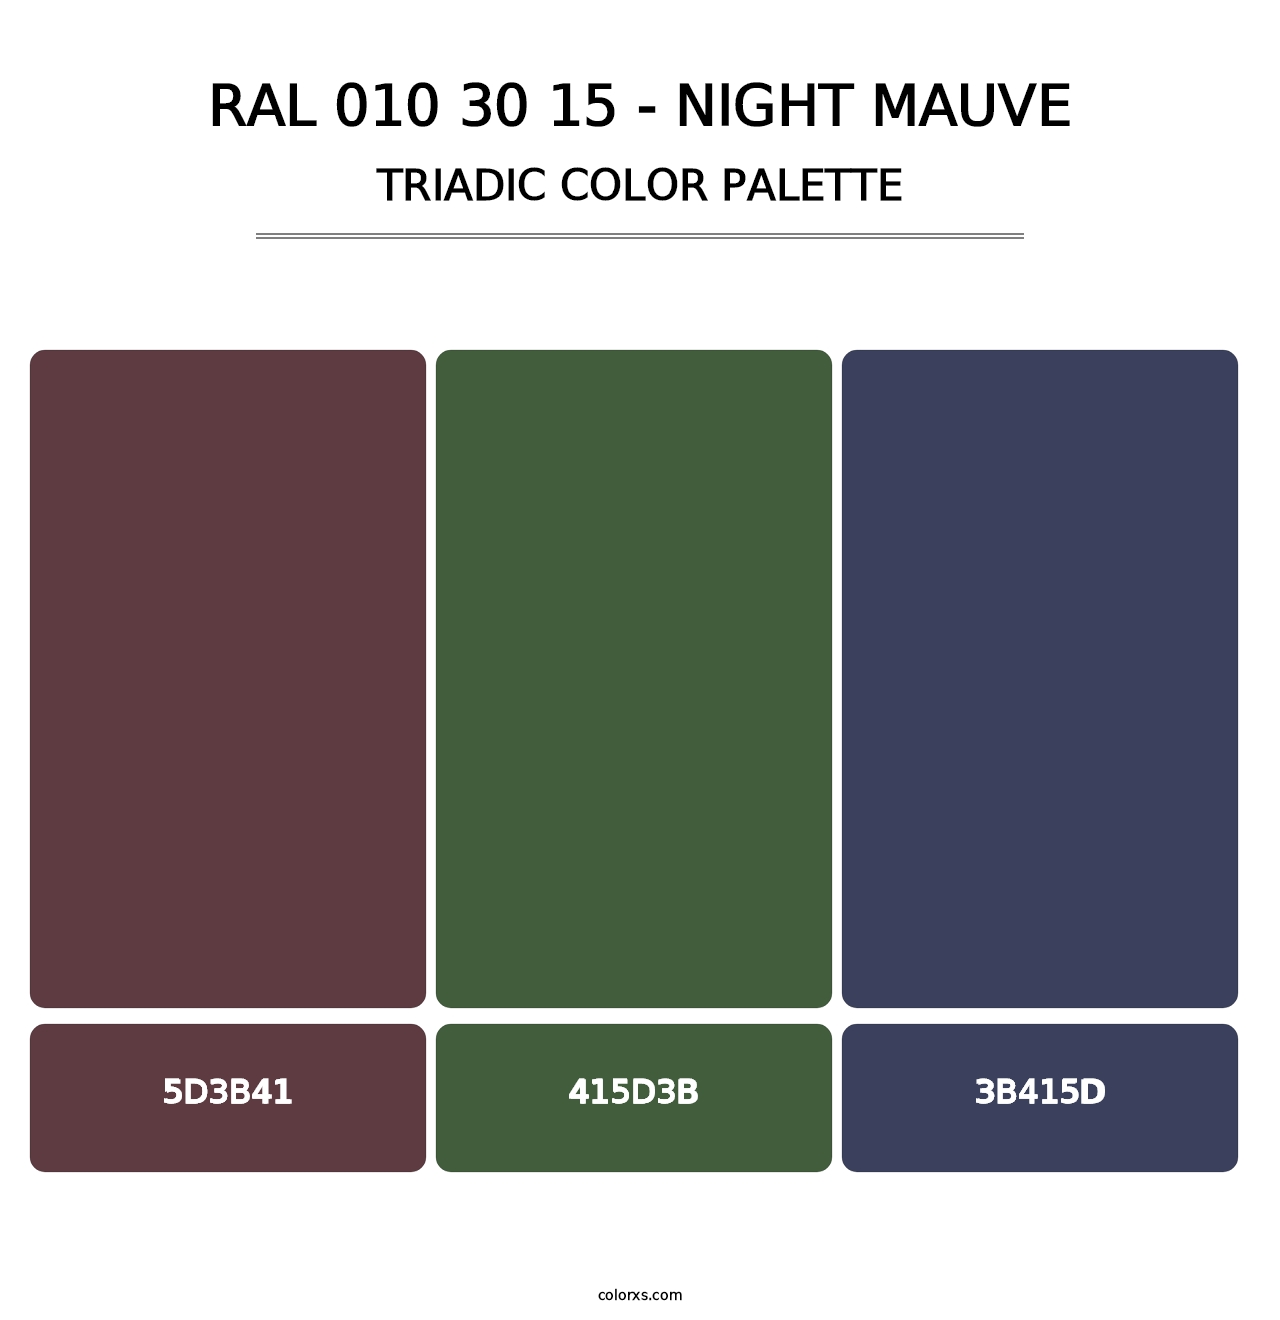 RAL 010 30 15 - Night Mauve - Triadic Color Palette